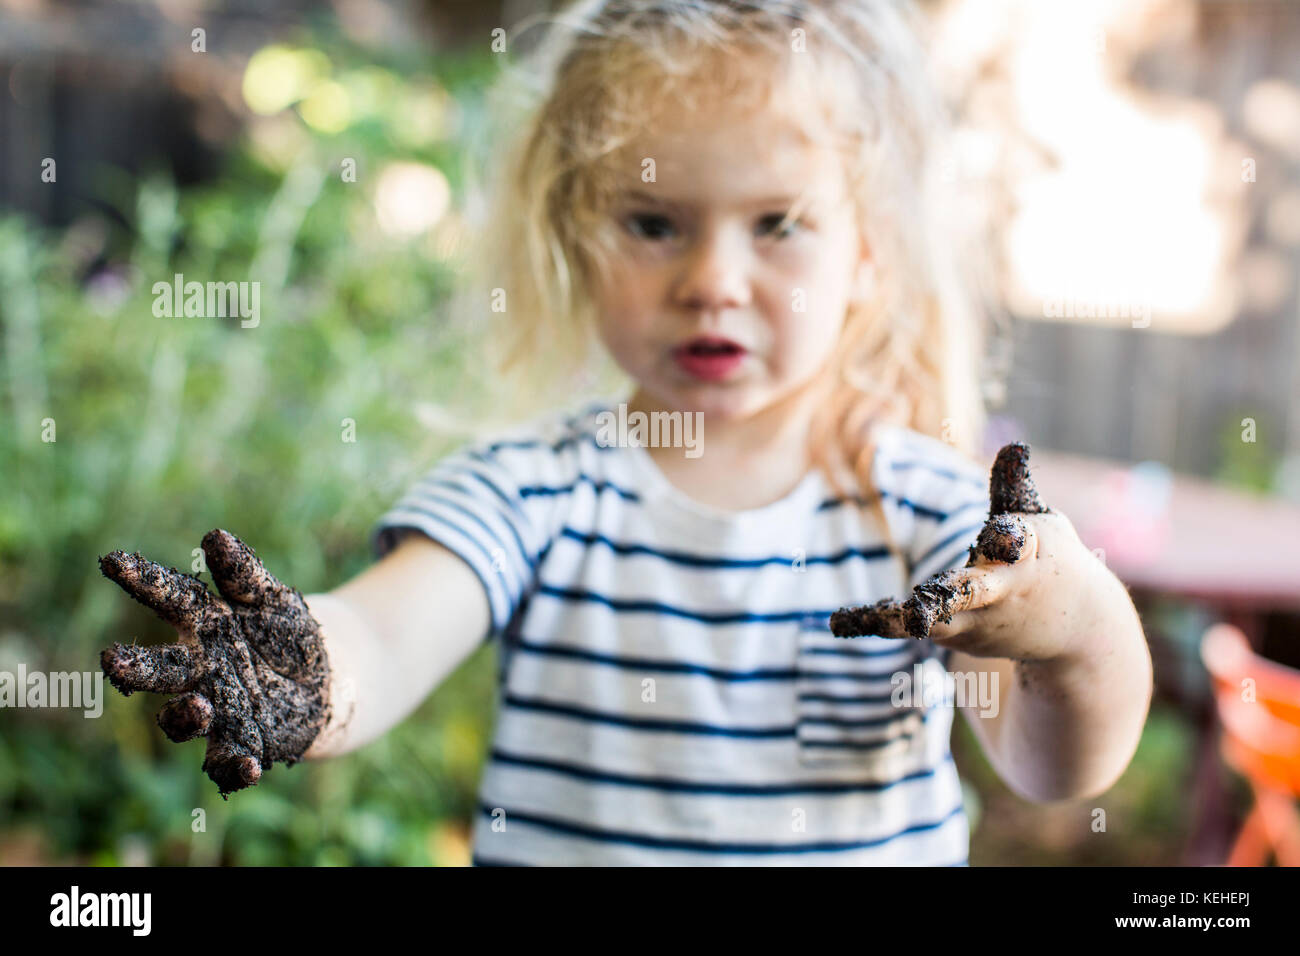 Caucasian girl with muddy hands in garden Stock Photo